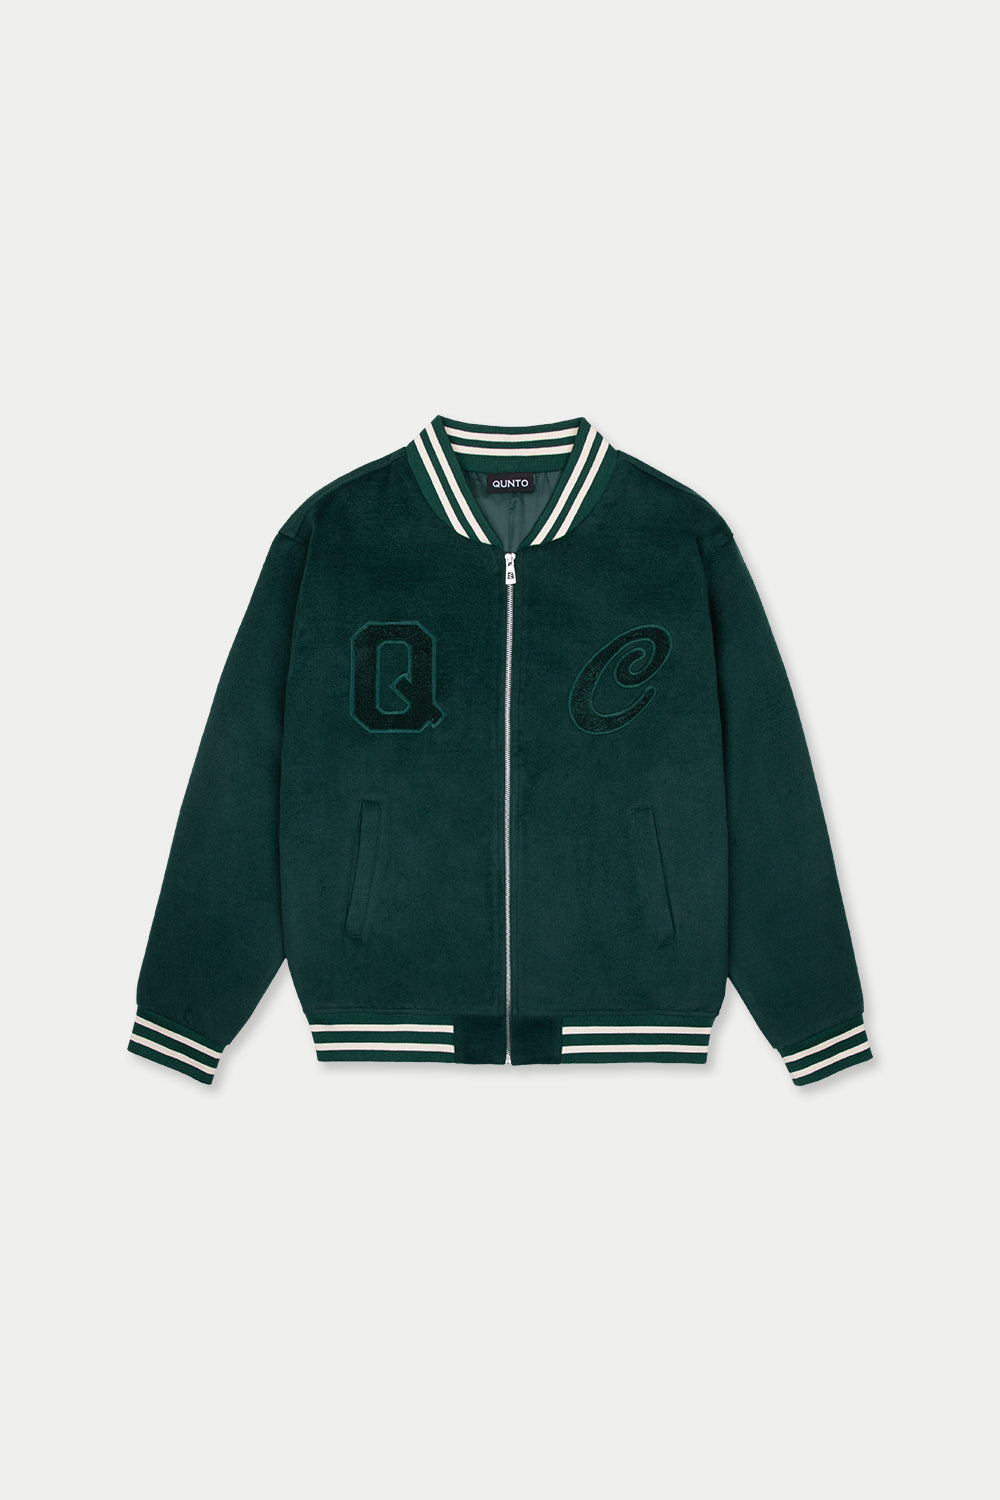 QC College Jacket  Green